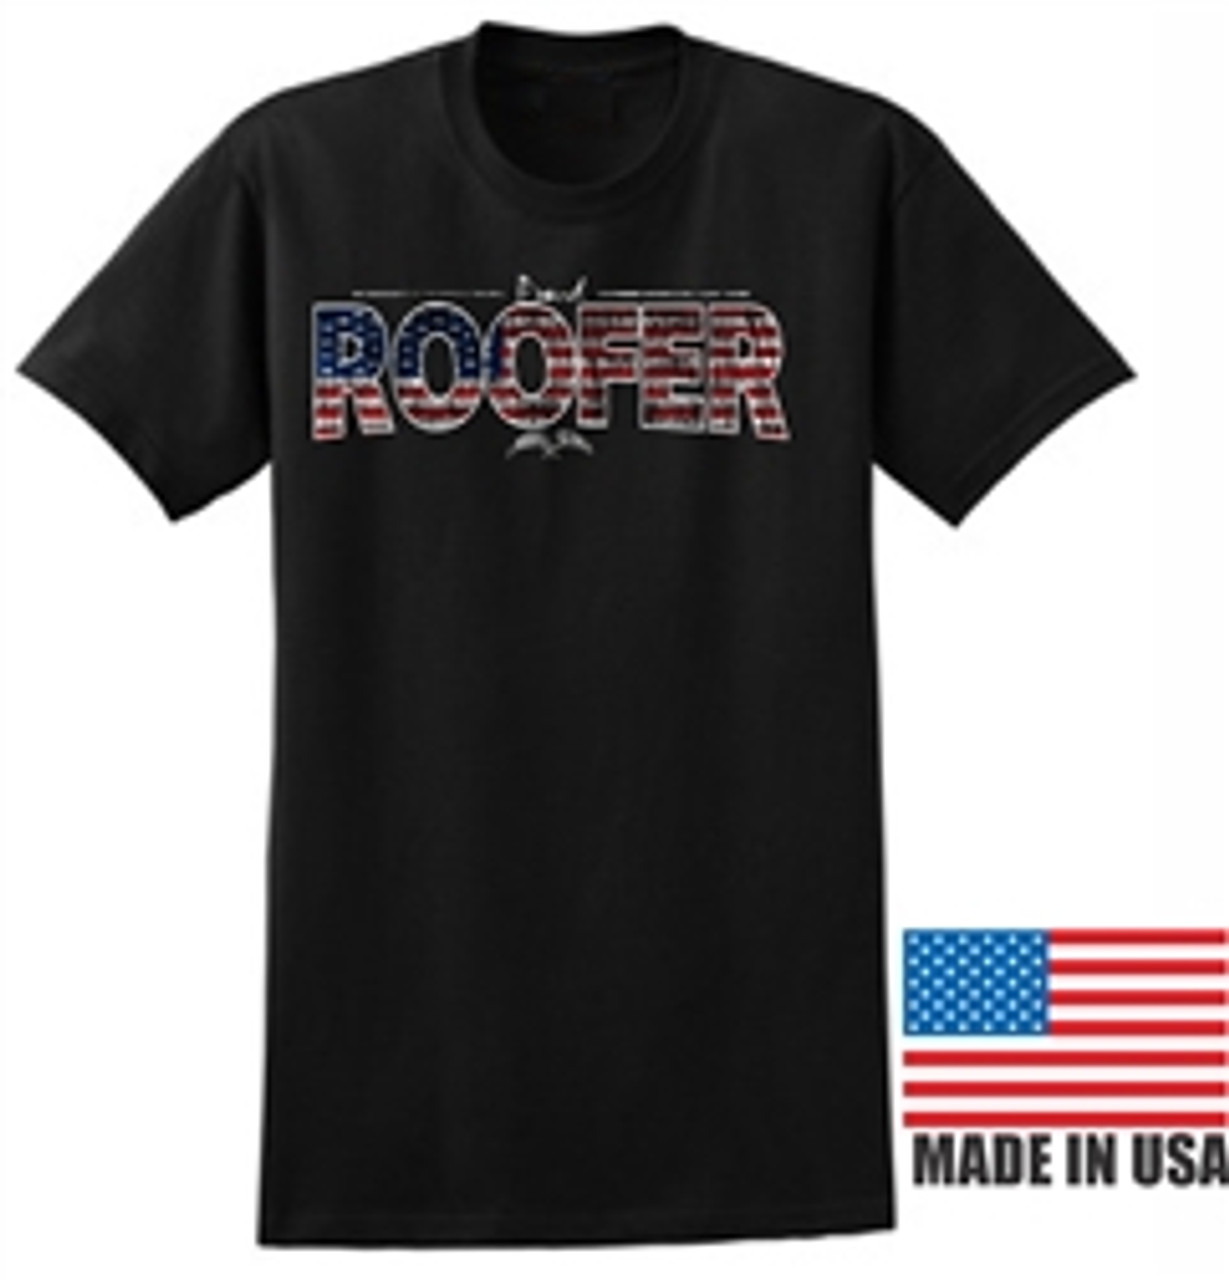 Roofer T-Shirt